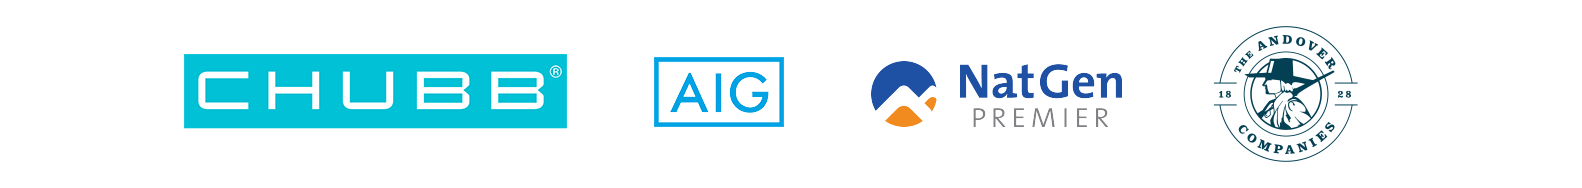 Chubb, AIG, NatGen Premier, and the Andover Companies logos